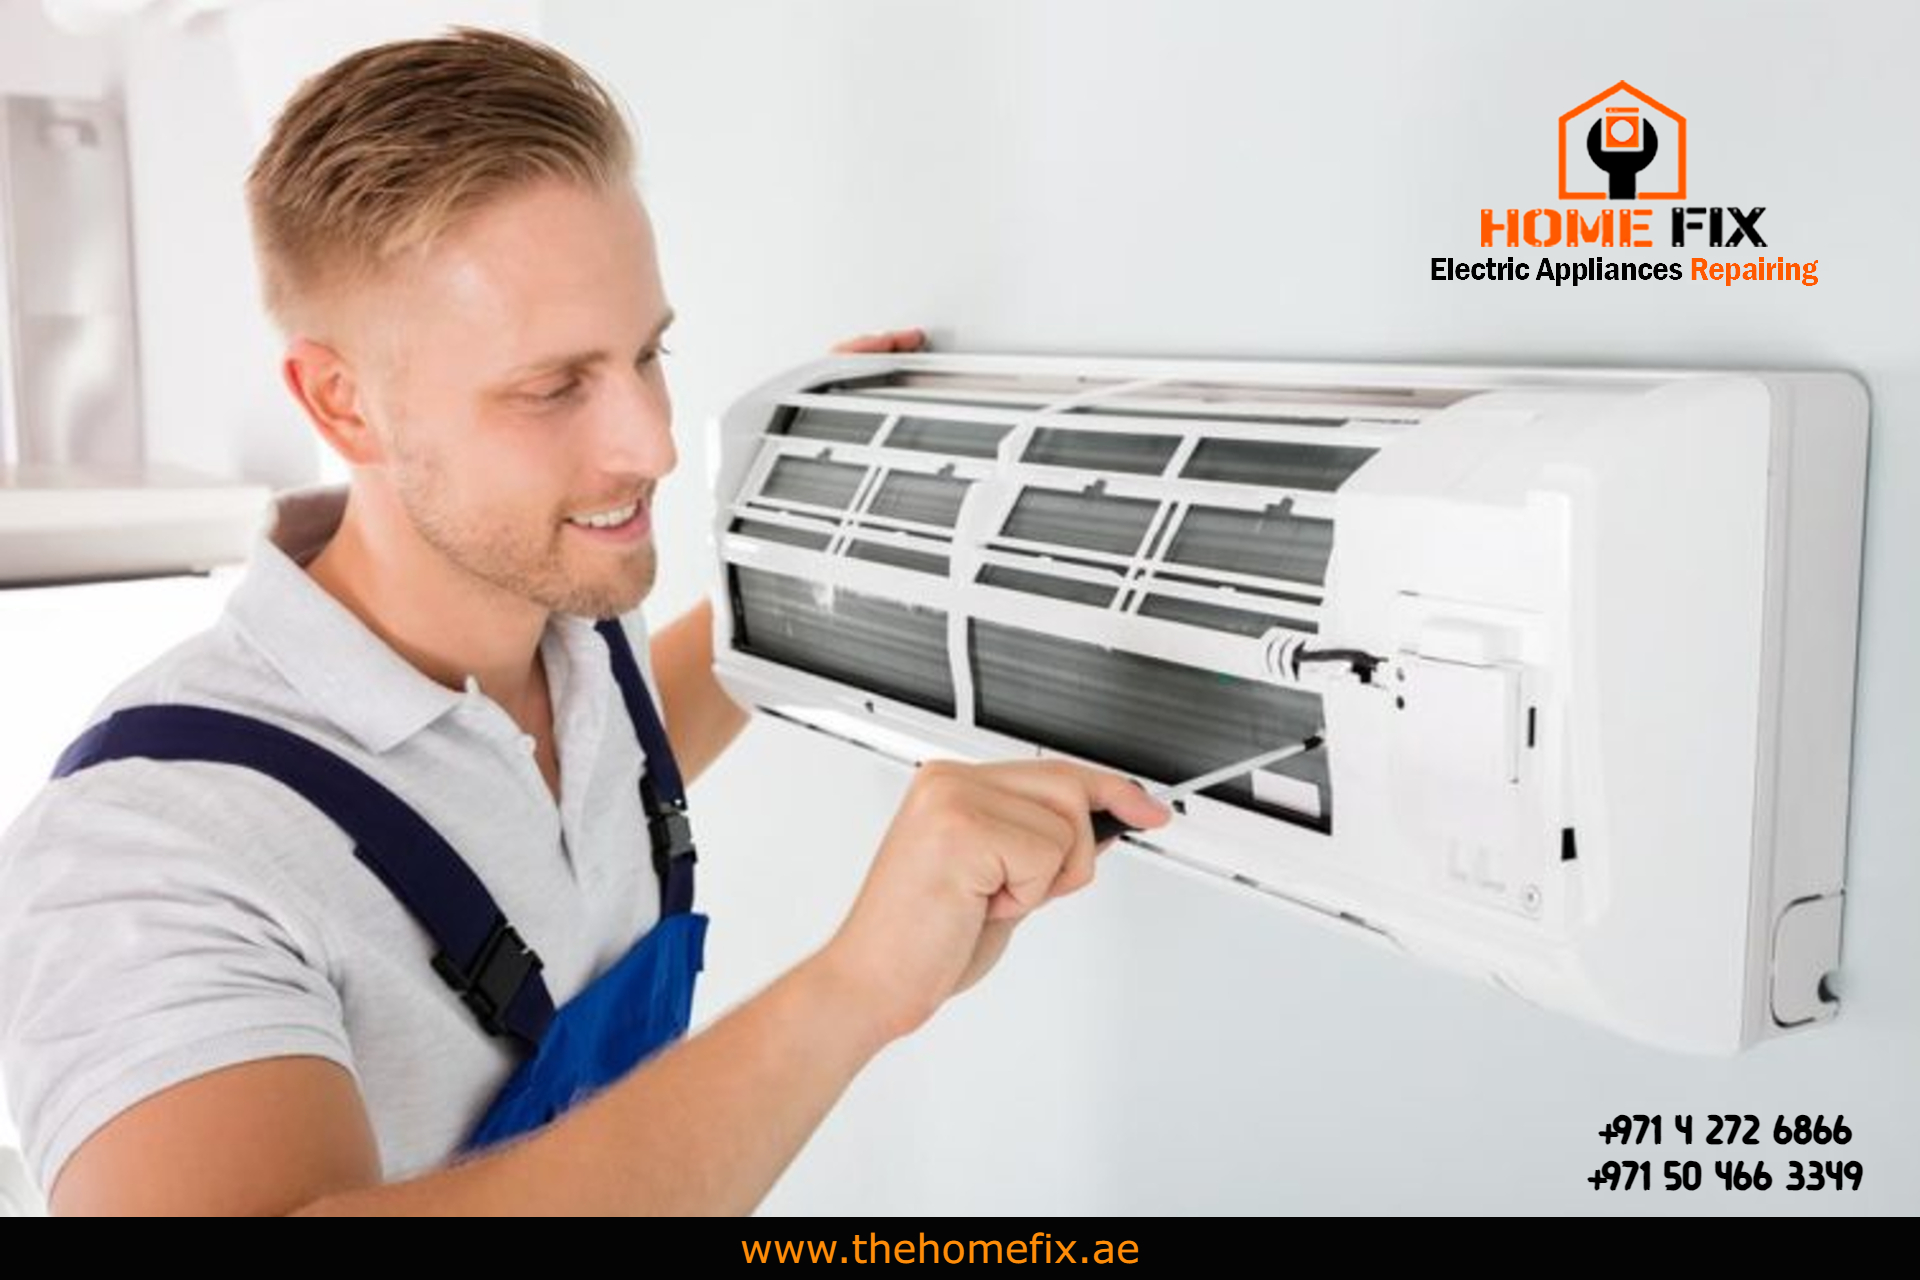 air conditioner repair services company in Dubai